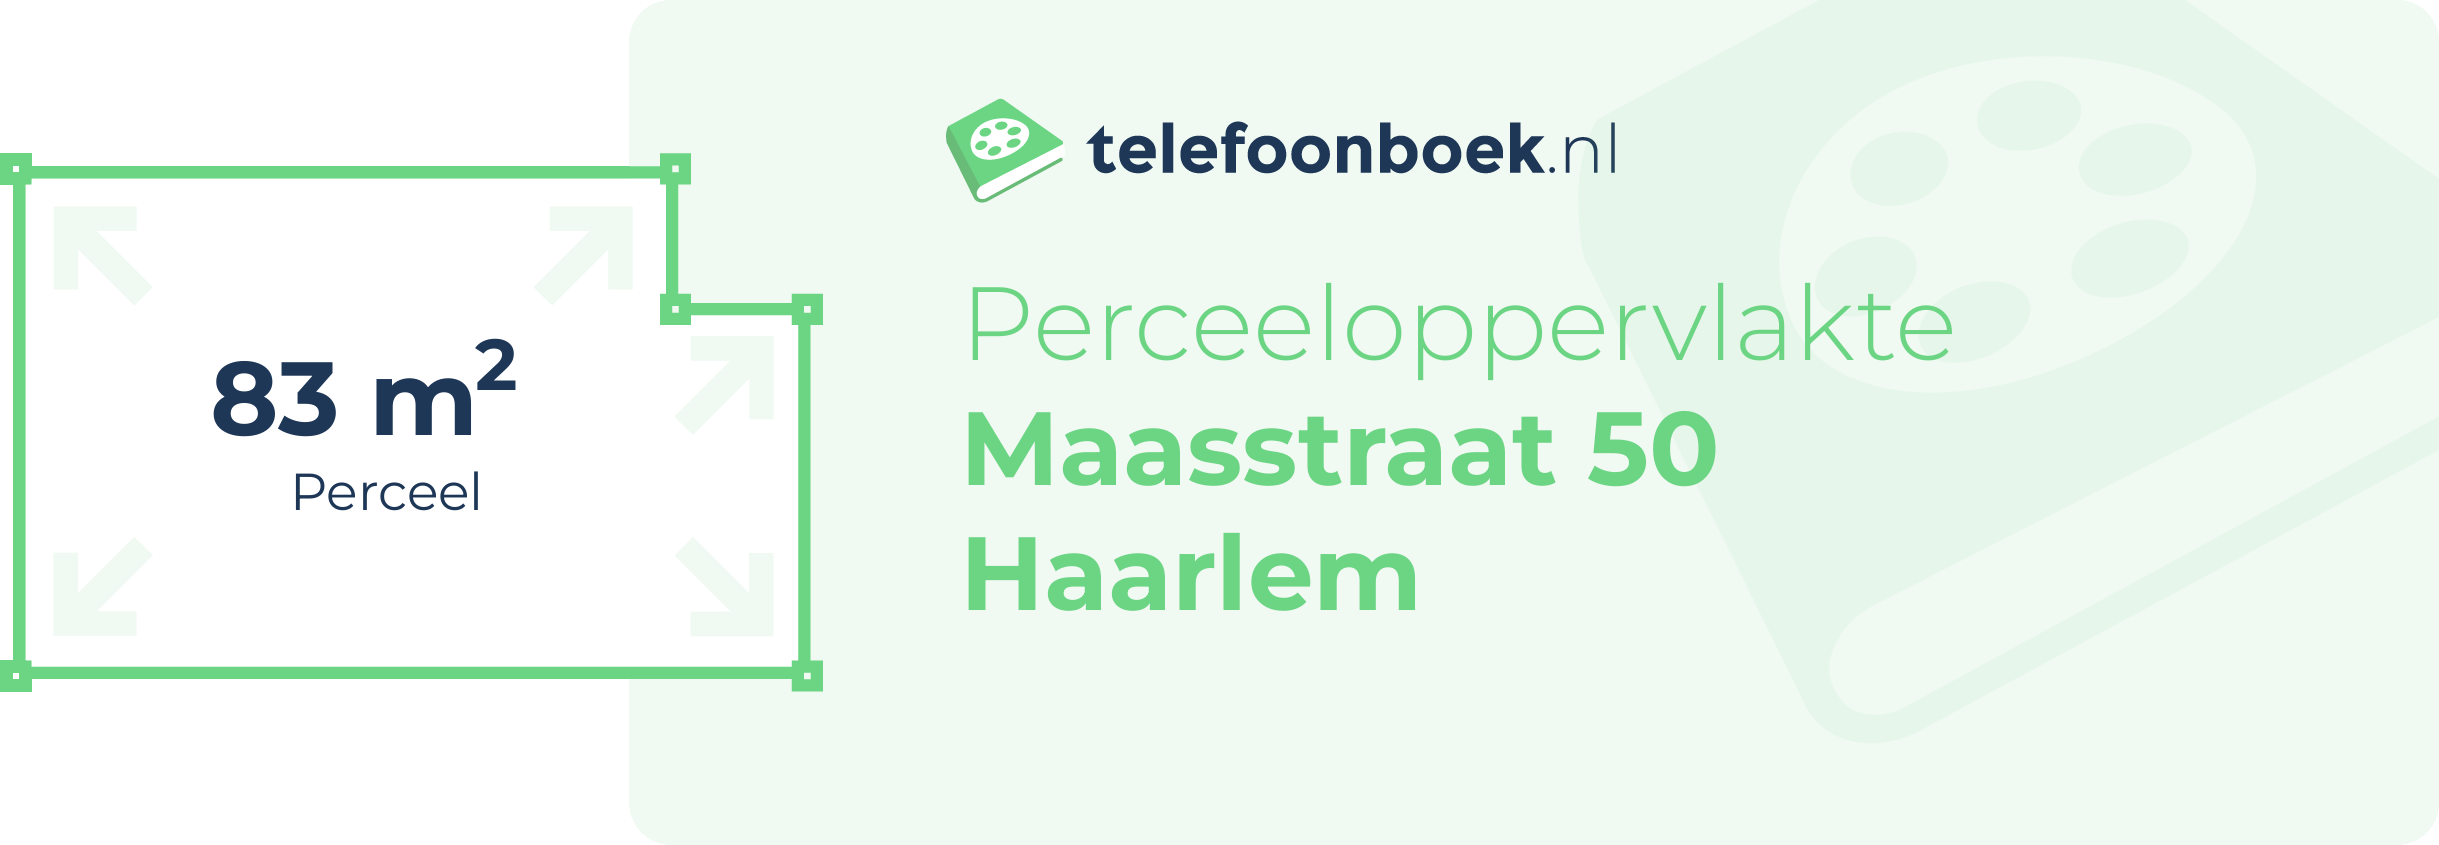 Perceeloppervlakte Maasstraat 50 Haarlem